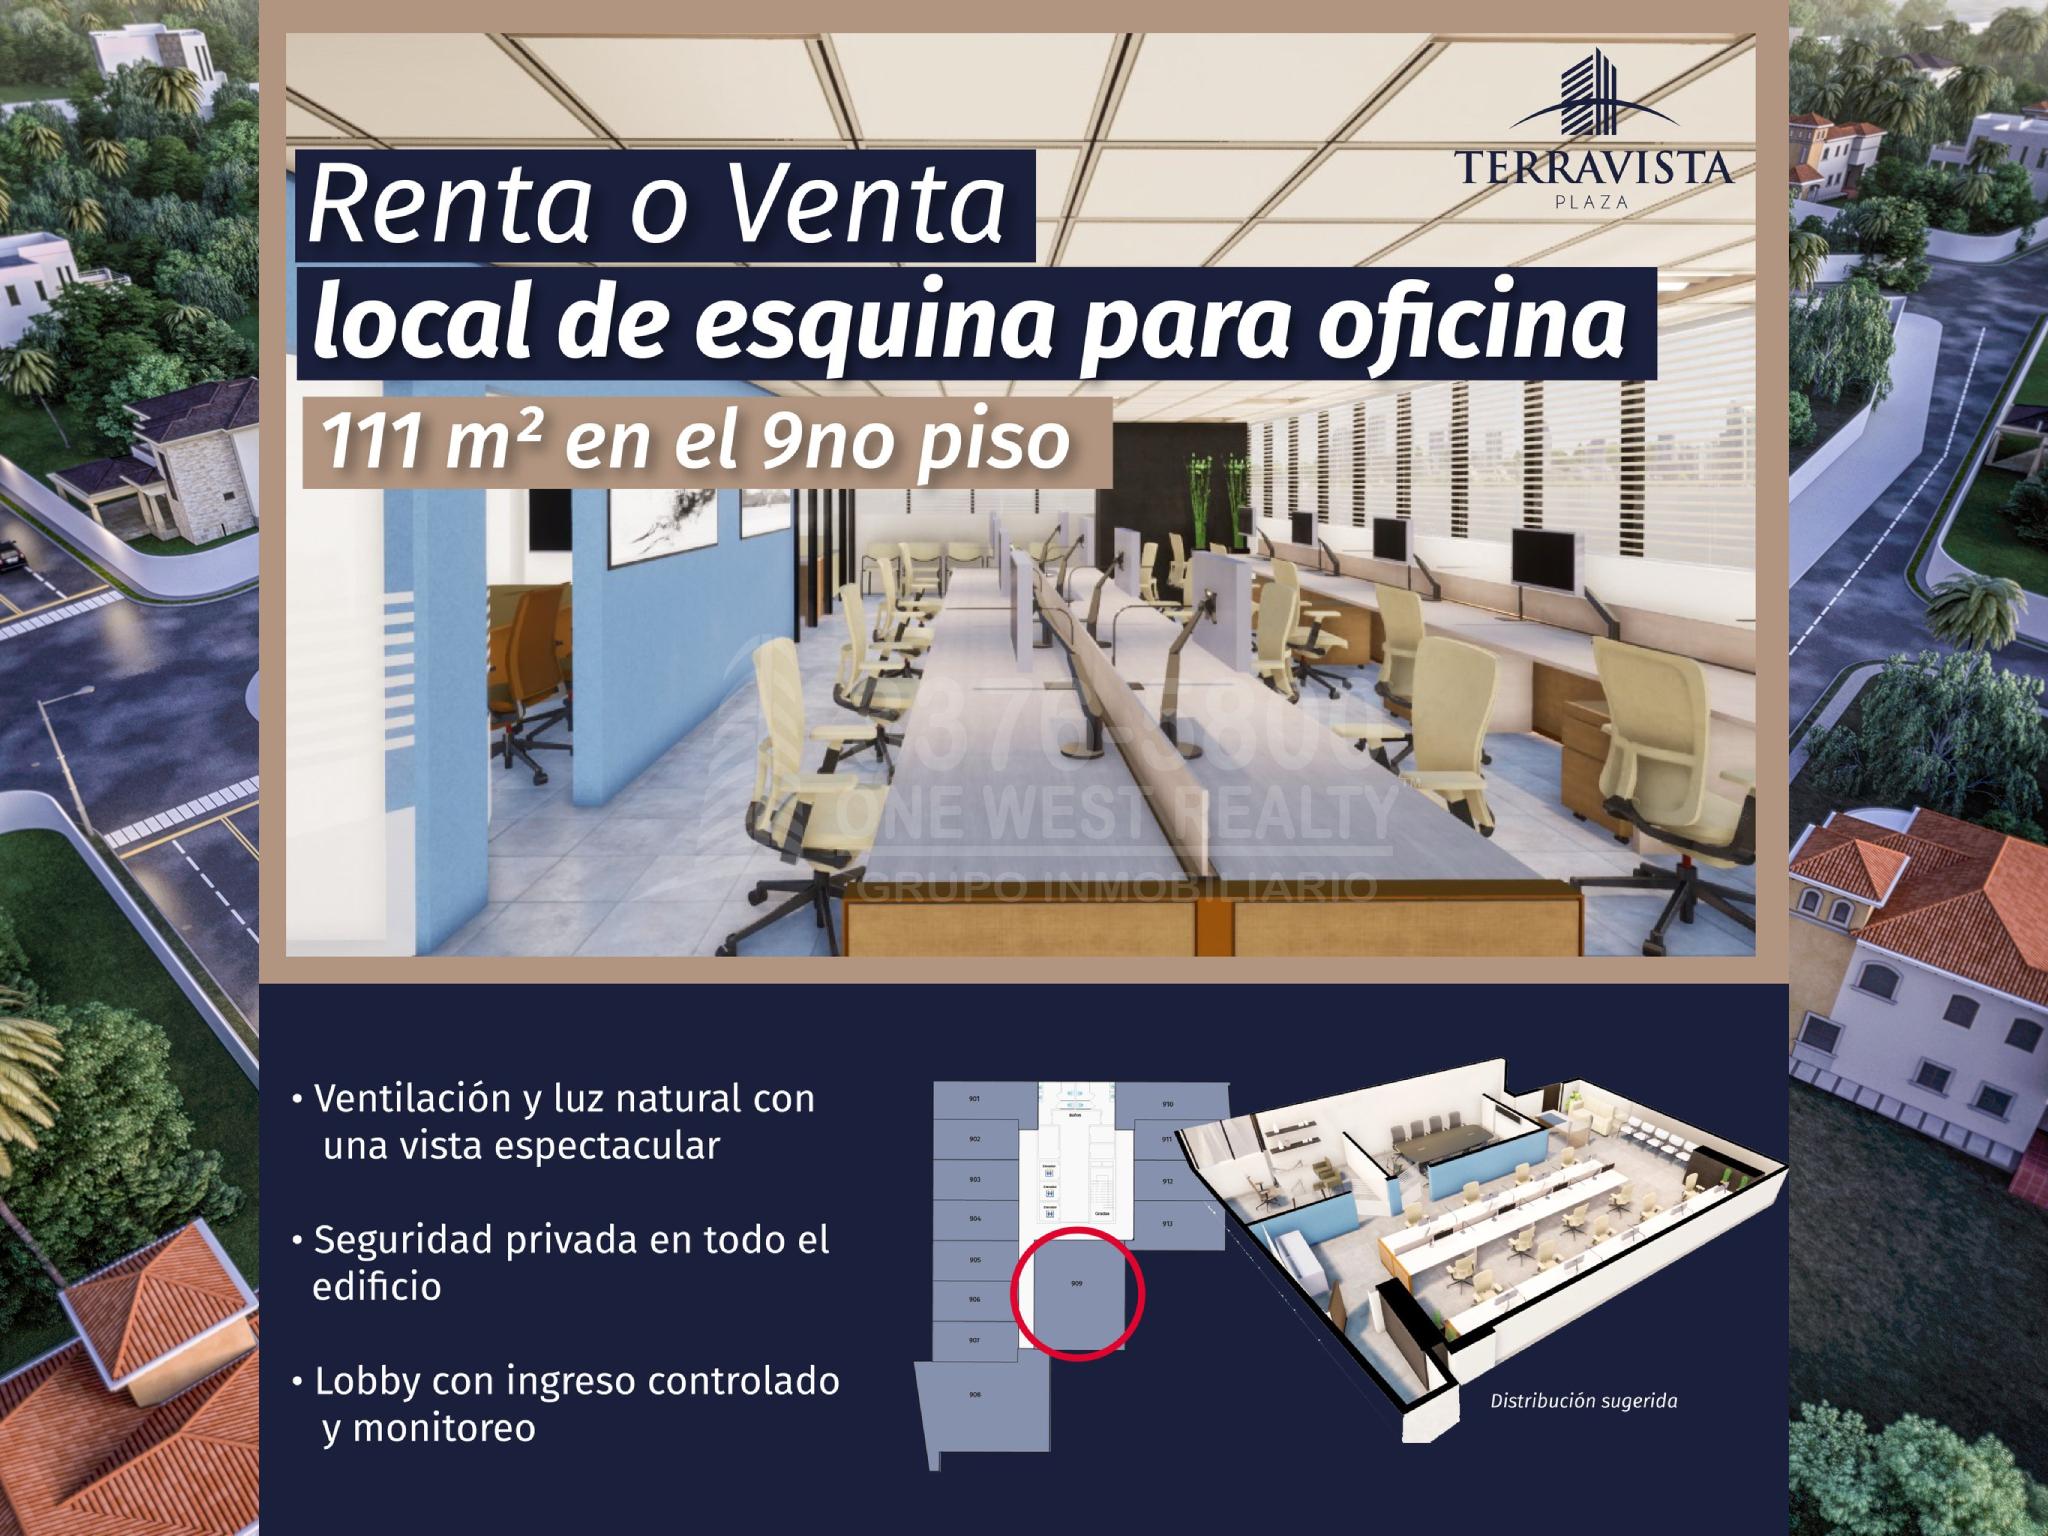 Terravista Plaza Oficinas Corporativas en Renta o Venta